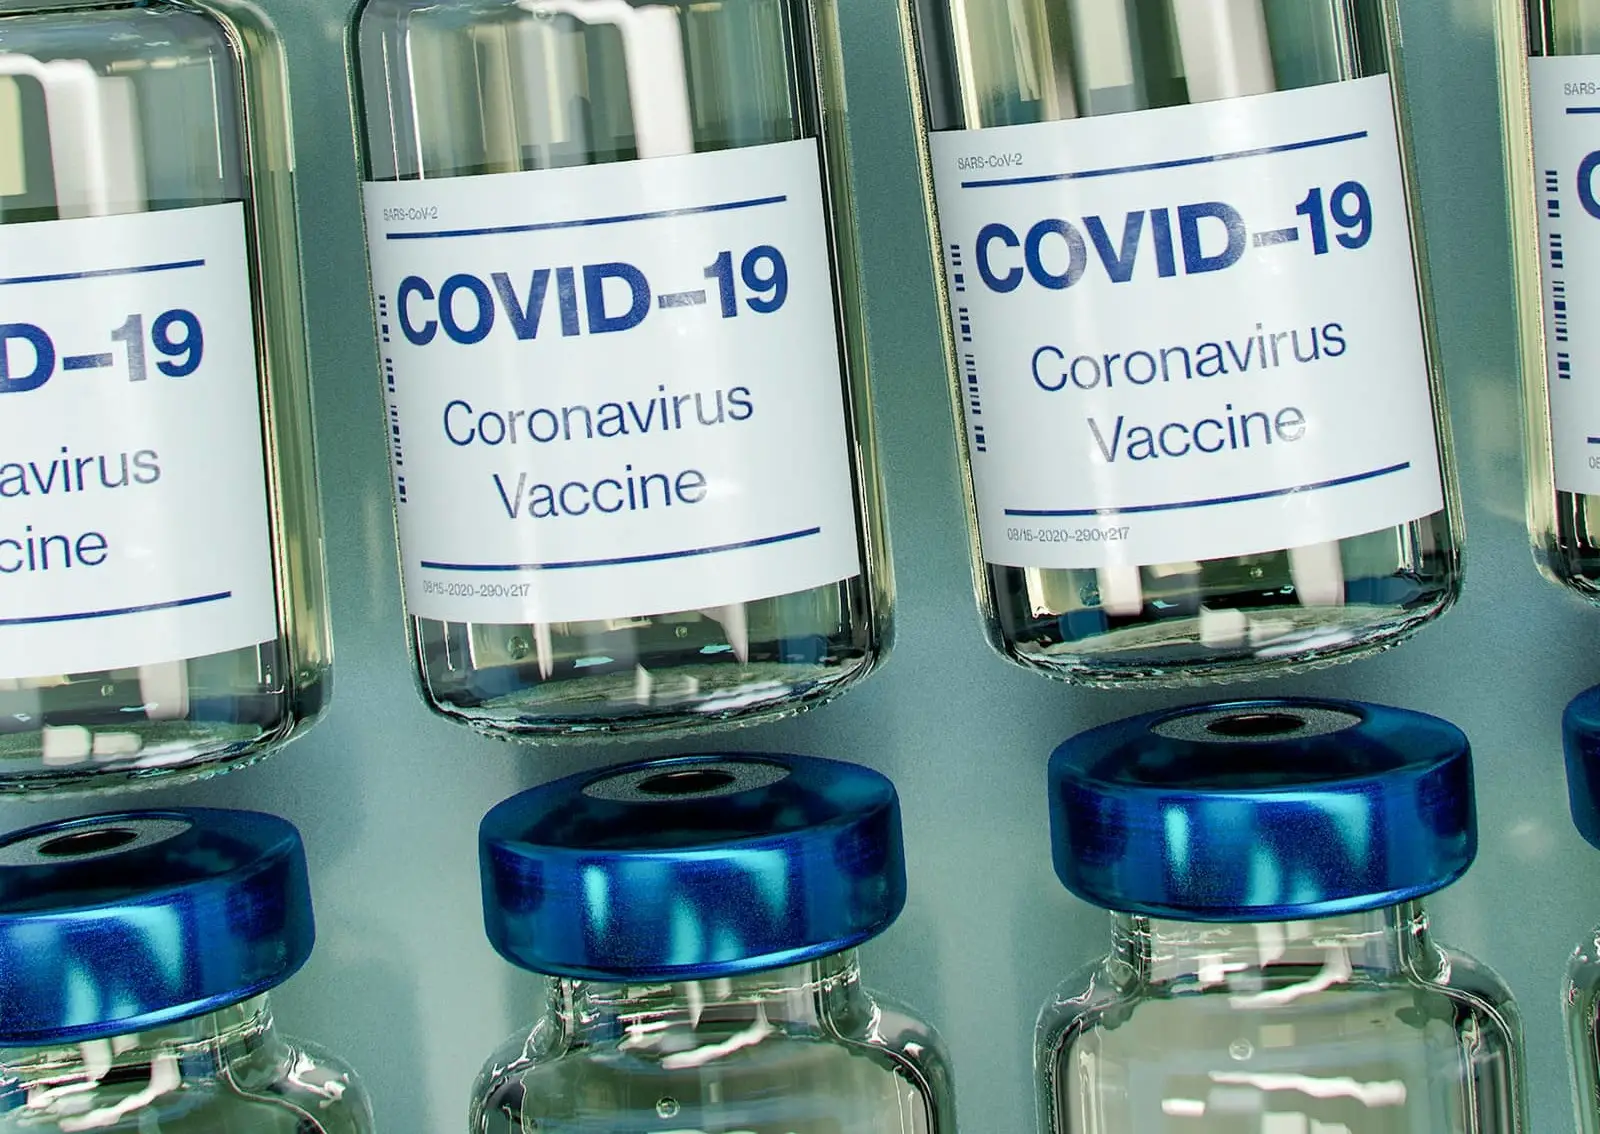 Mocked up covid-19 vaccine bottles